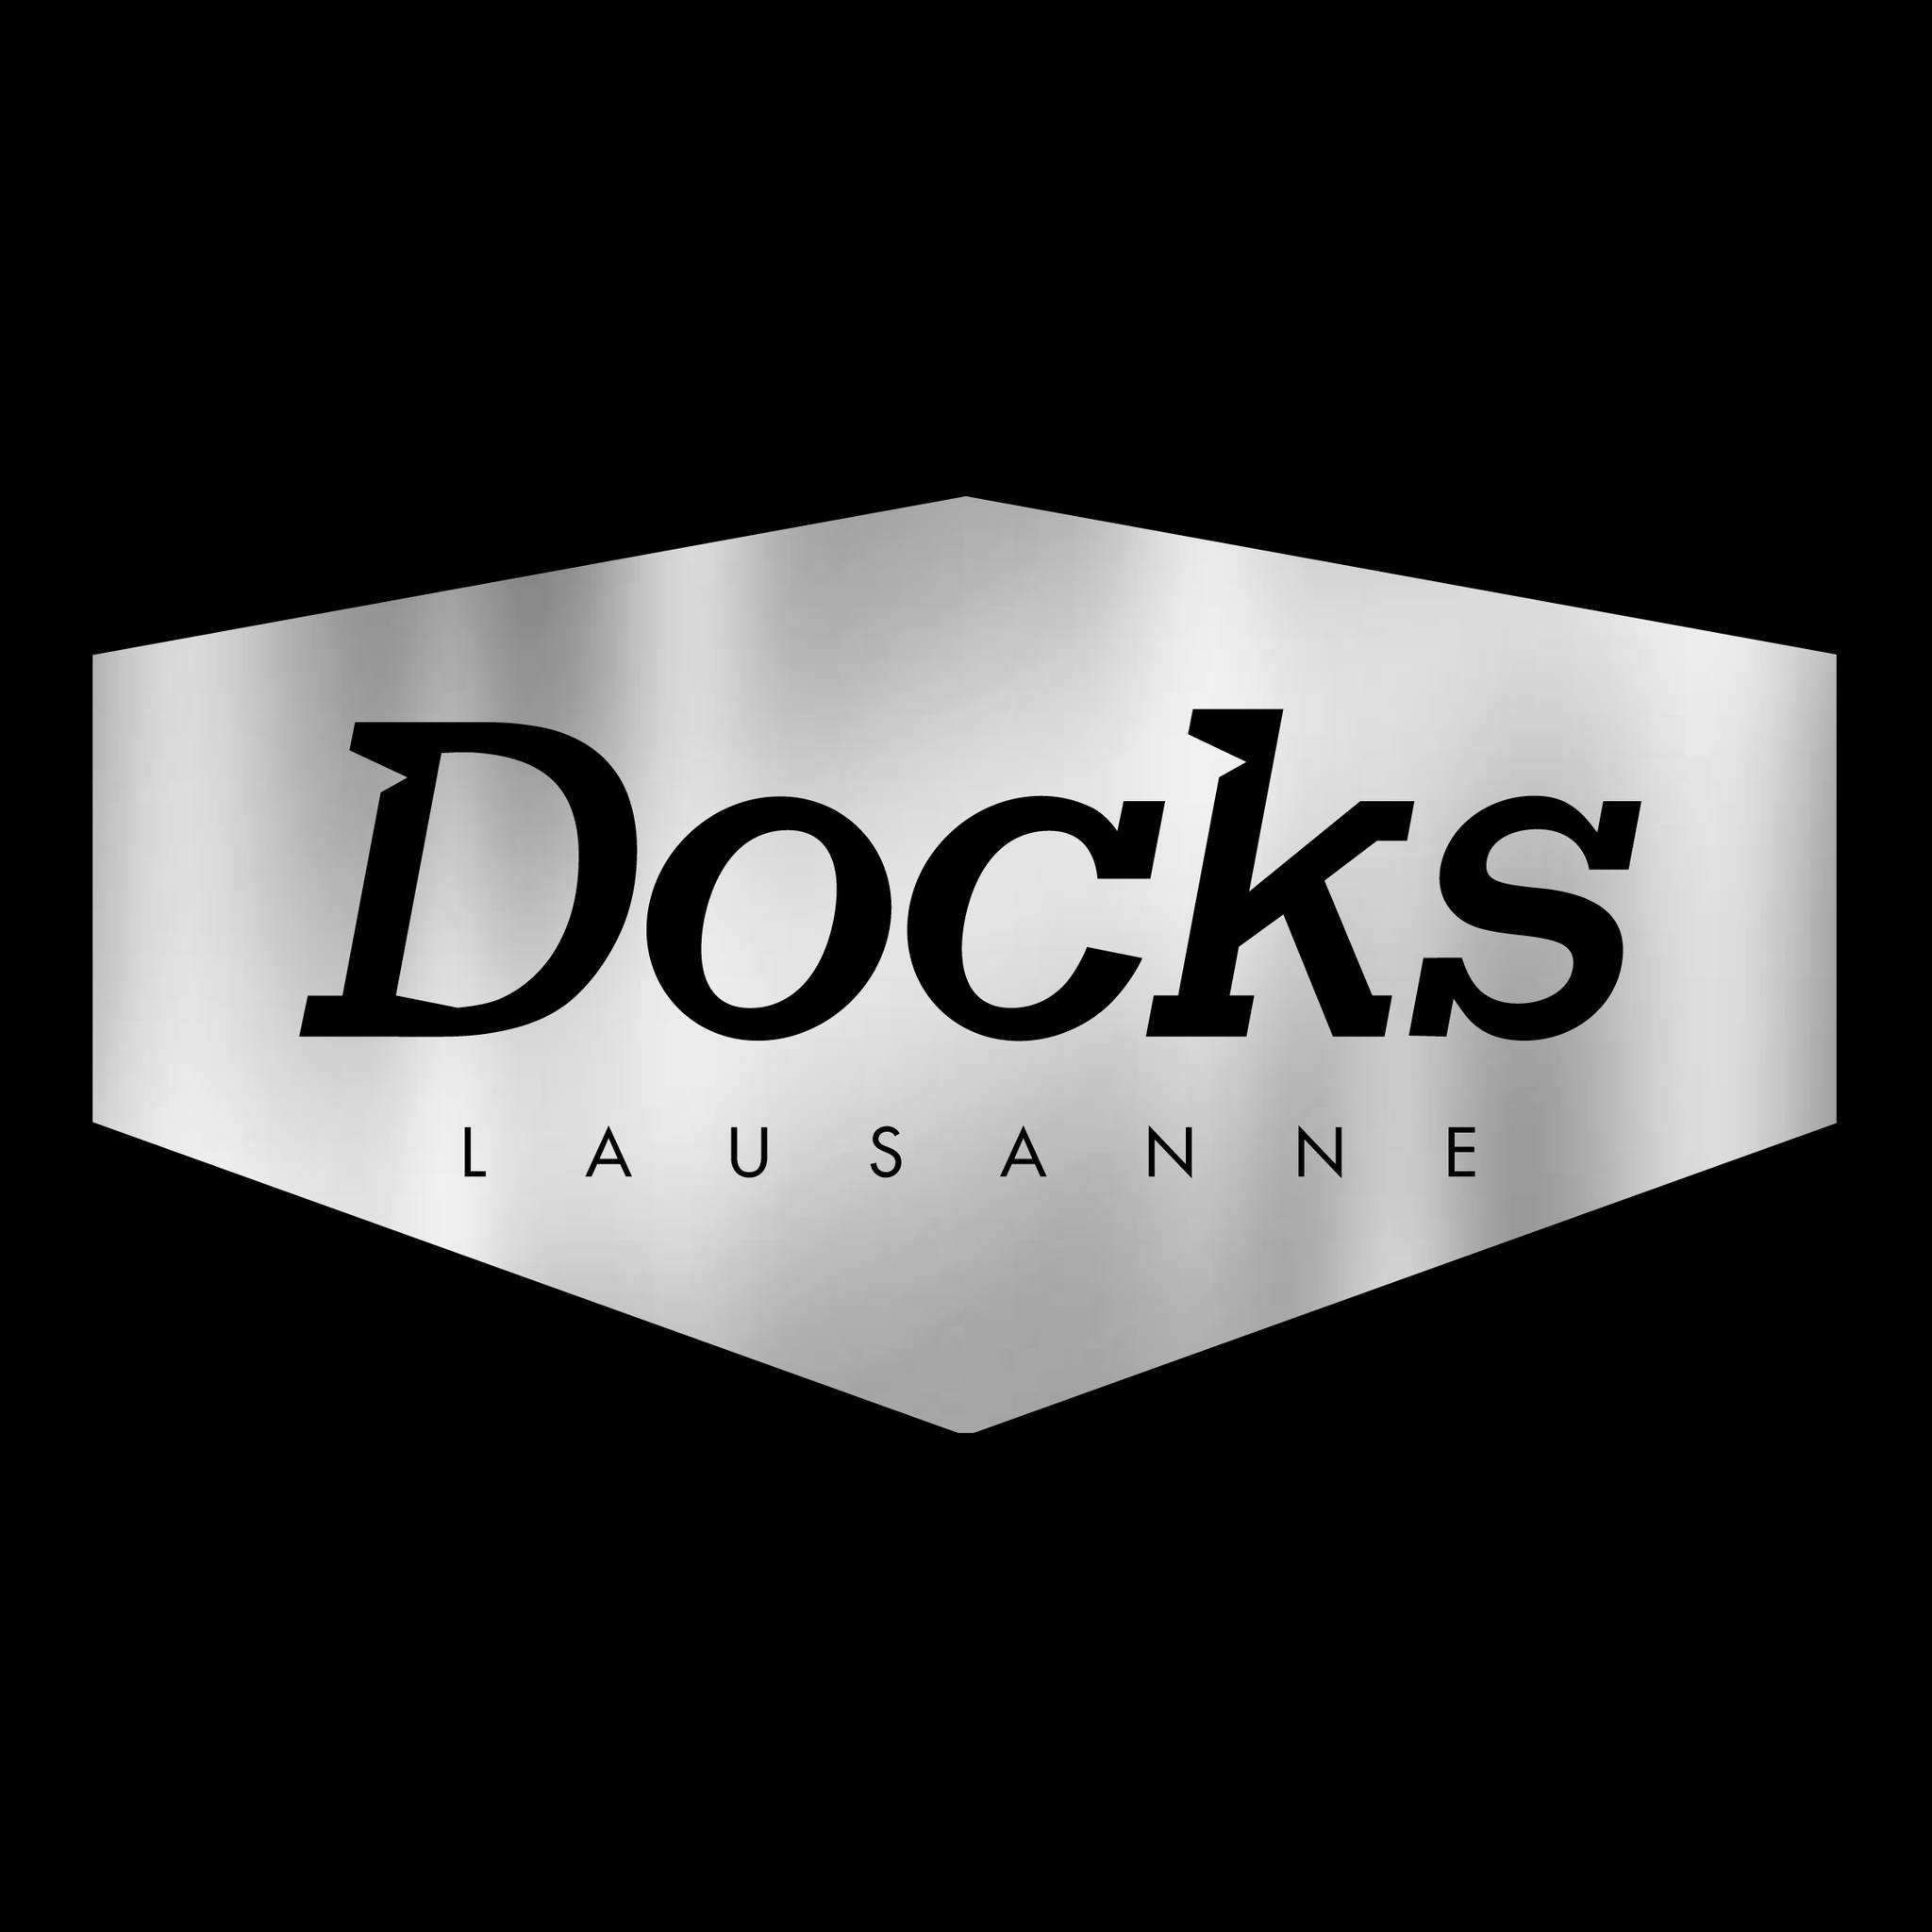 Rendez Vous - Ultra Sunn at Les Docks Lausanne Tickets